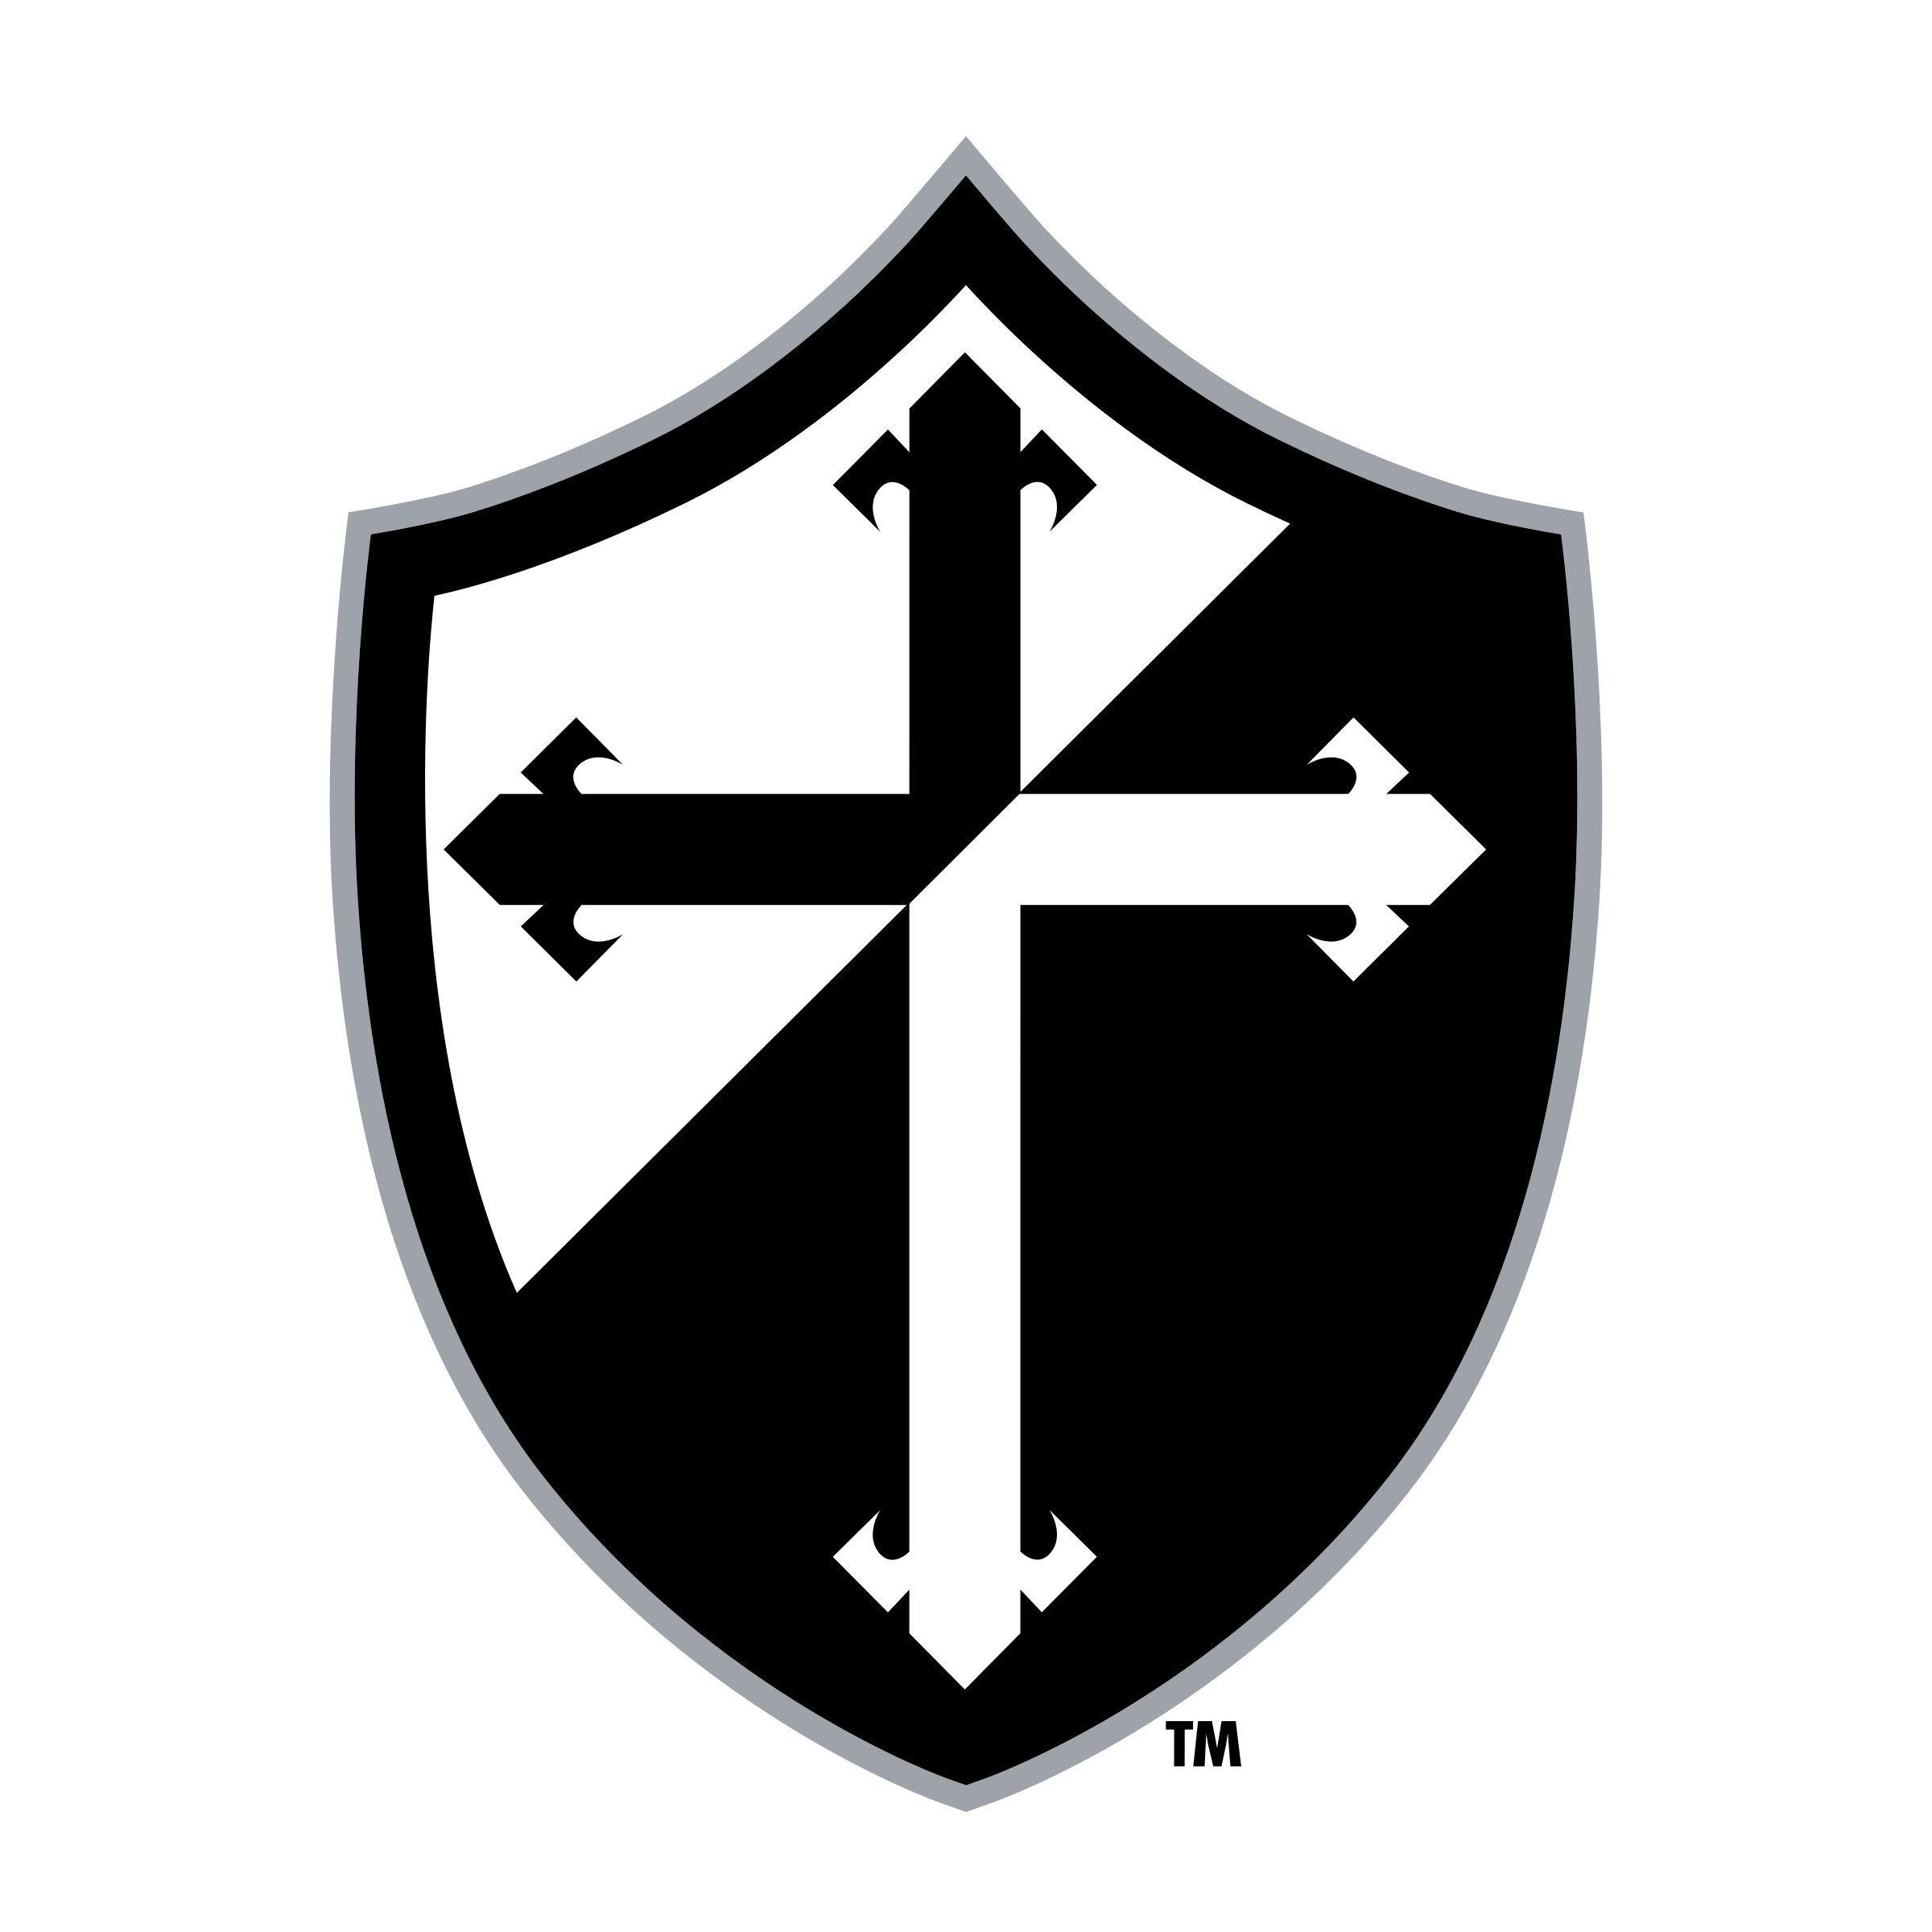 Friars Logo - Providence College Friars Logo PNG Transparent & SVG Vector ...